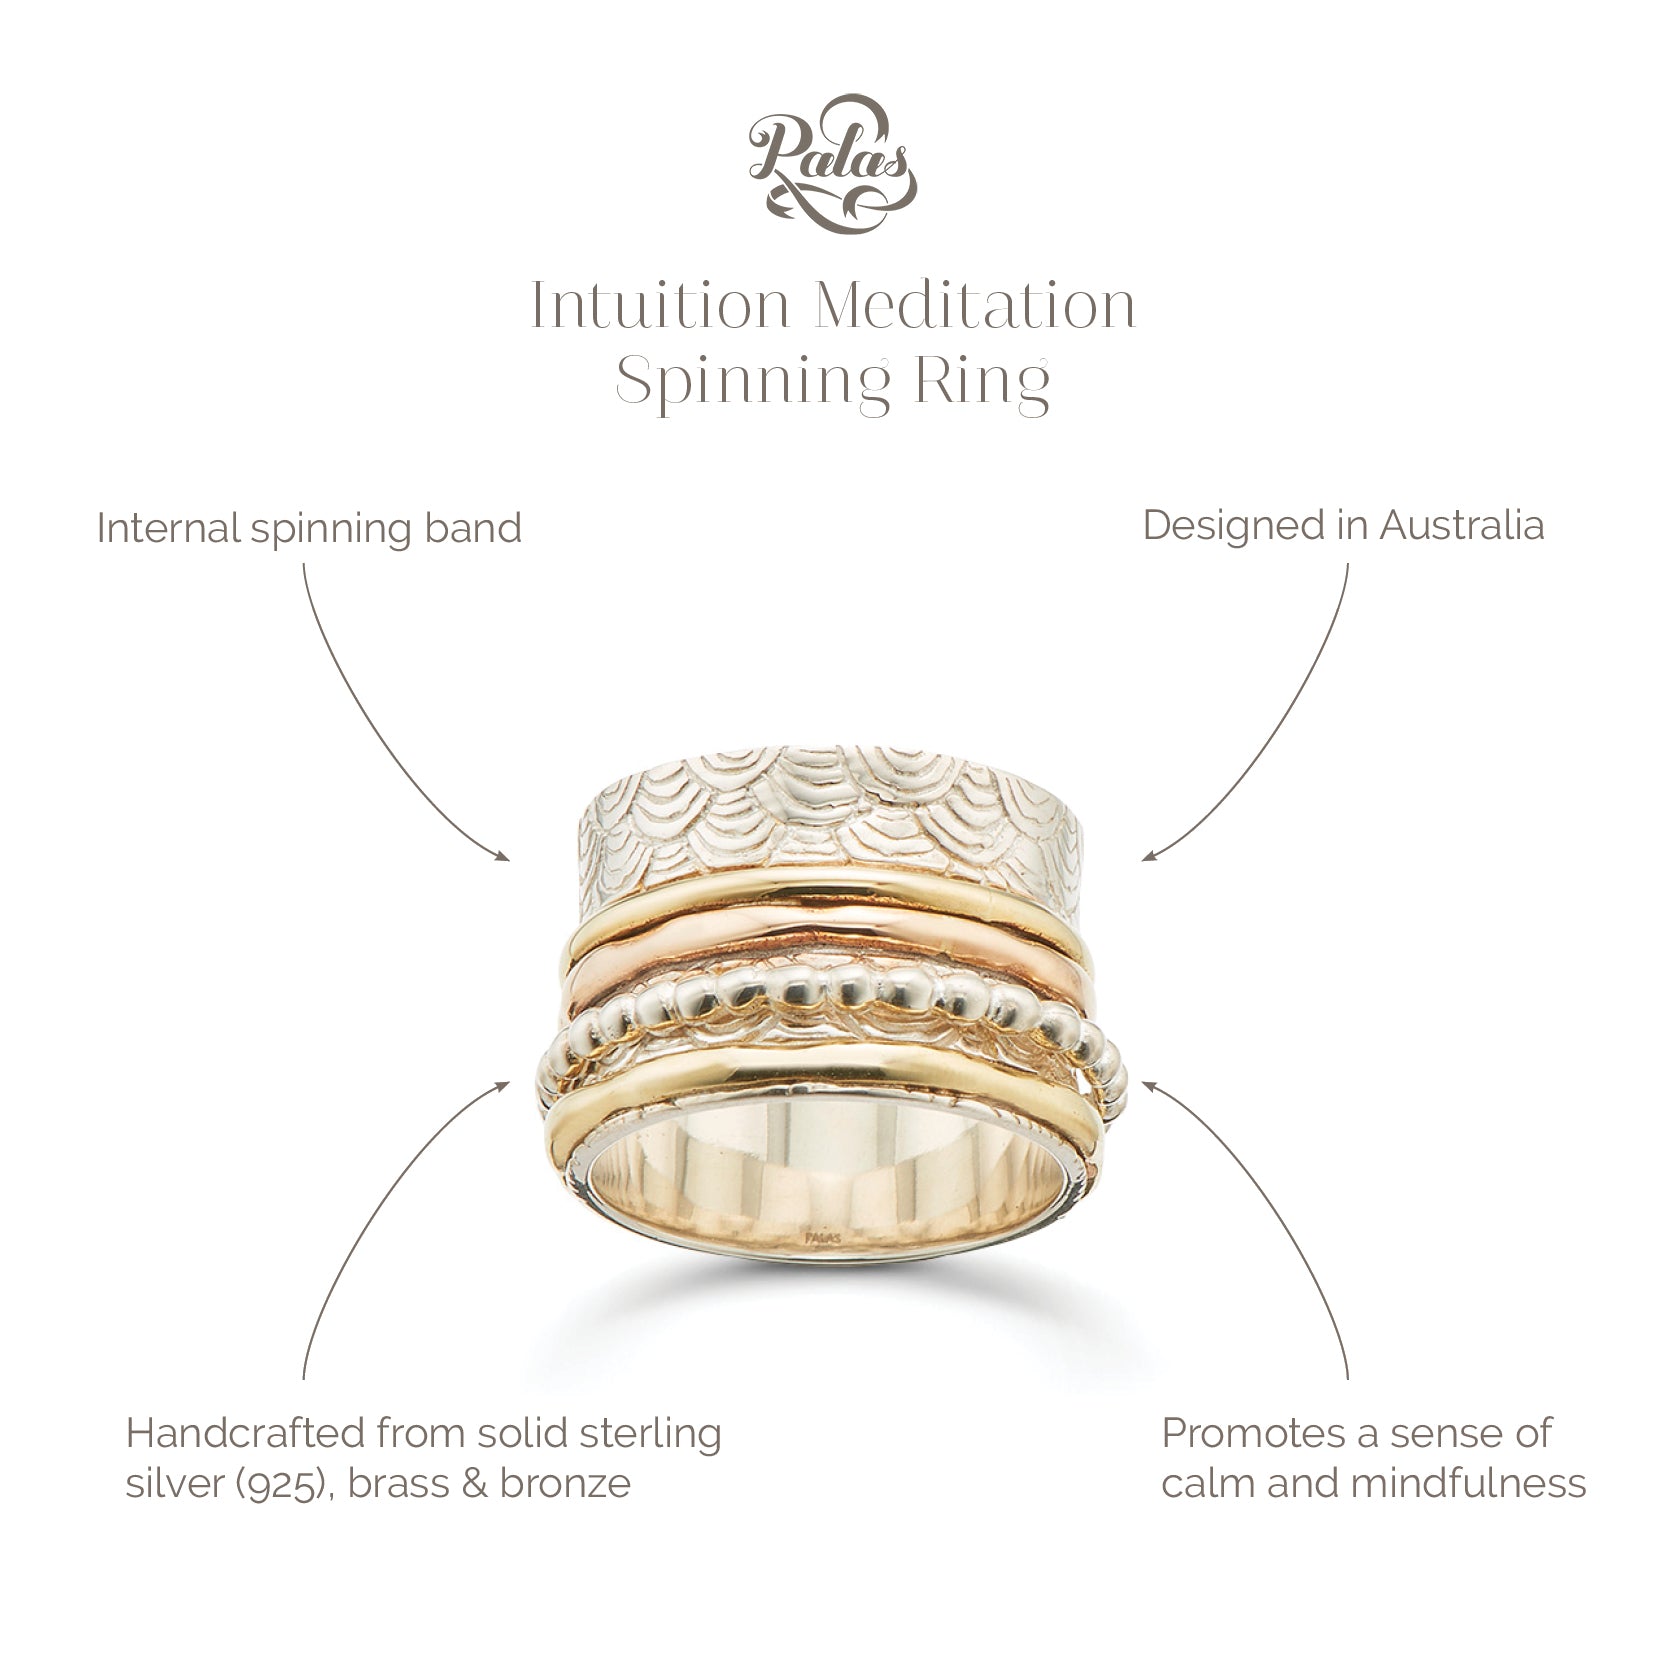 Intuition meditation spinning ring